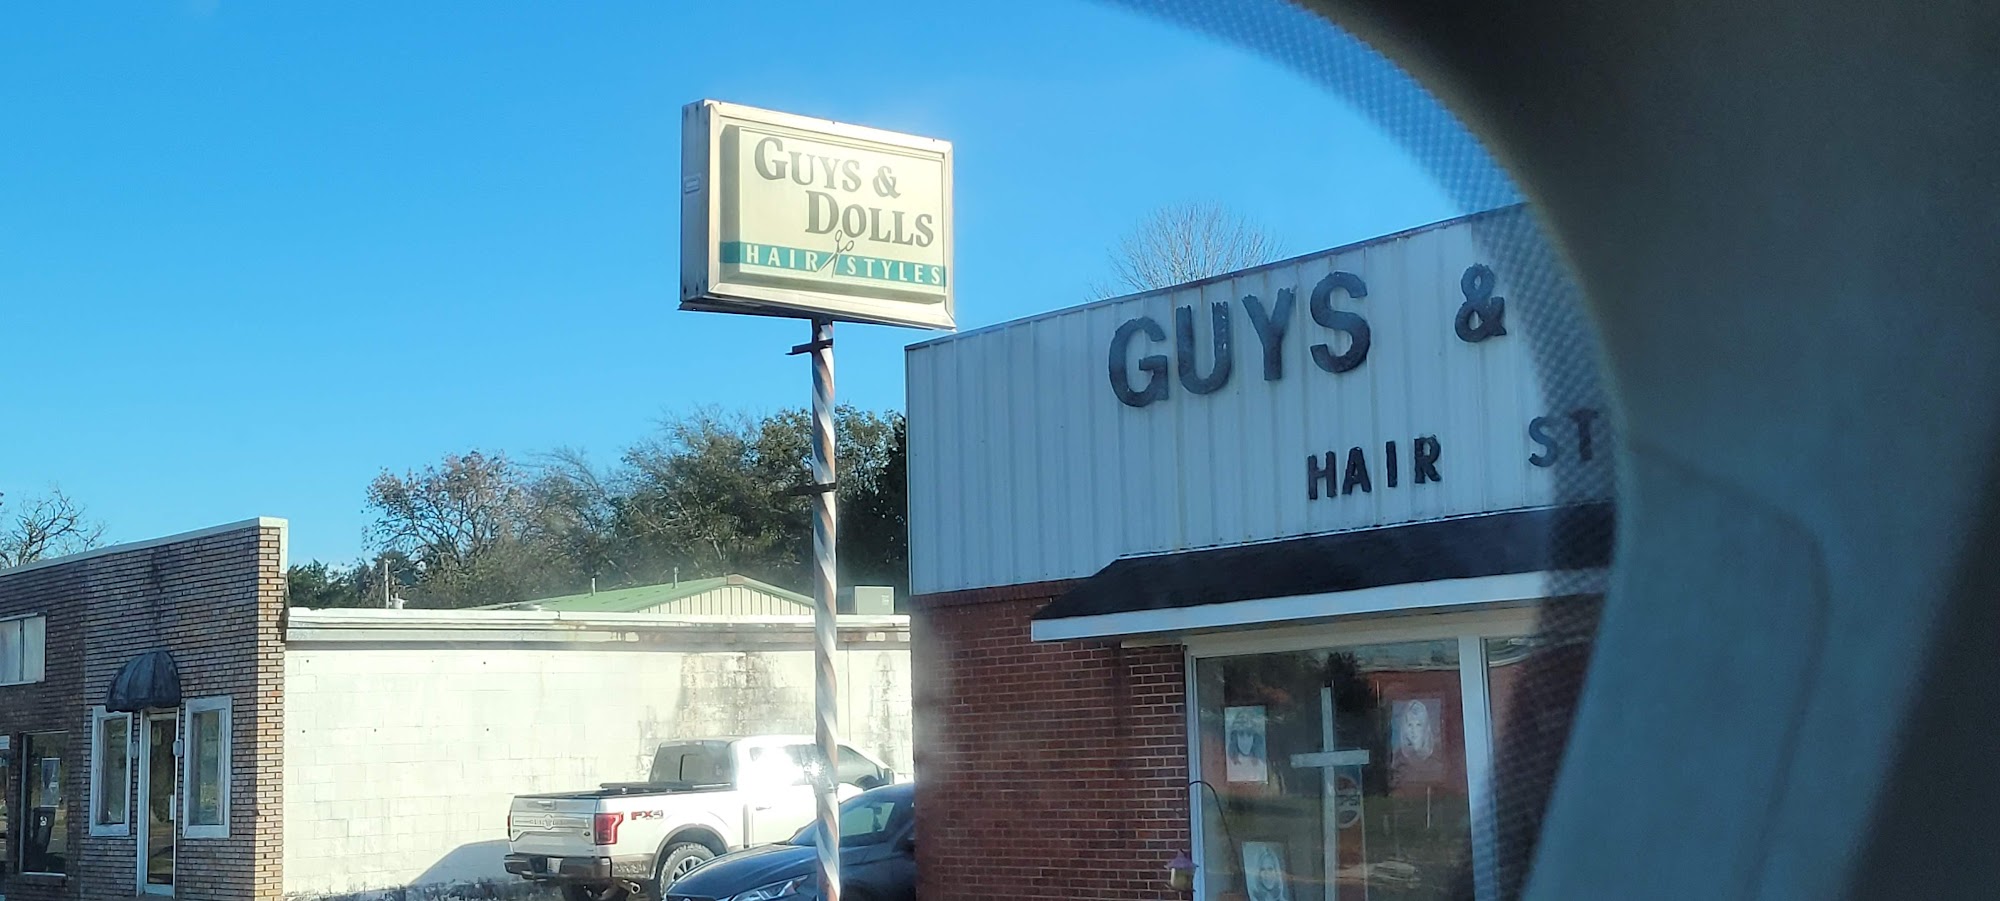 Guys & Dolls Hair Styles 925 S Cedar Ave, Demopolis Alabama 36732